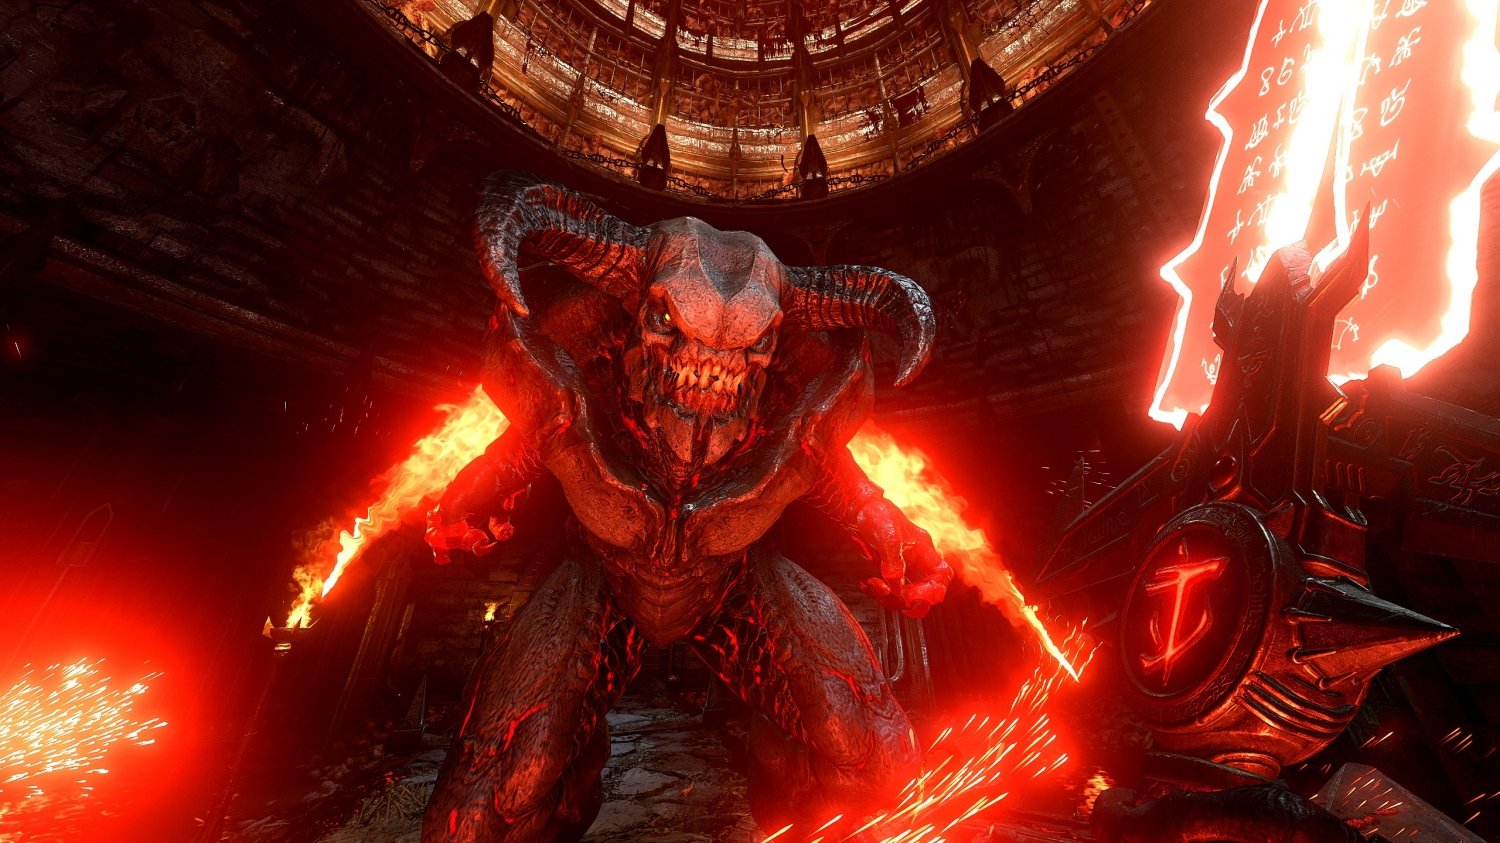 Doom Eternal's death metal environments showcased in new amazing video